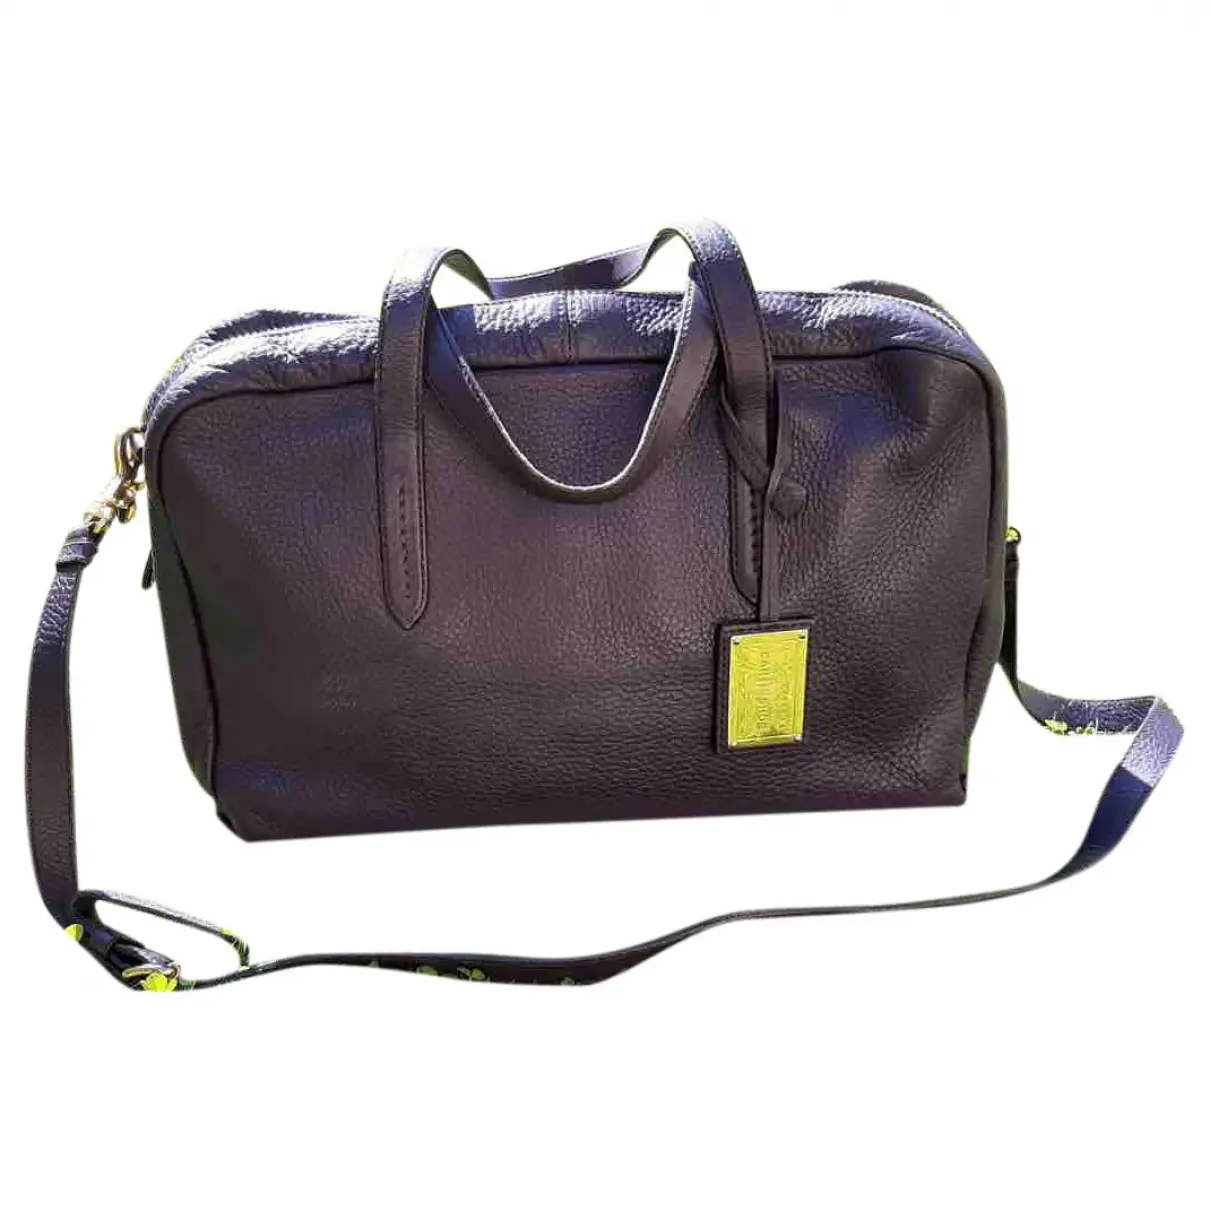 Leather handbag Carshoe